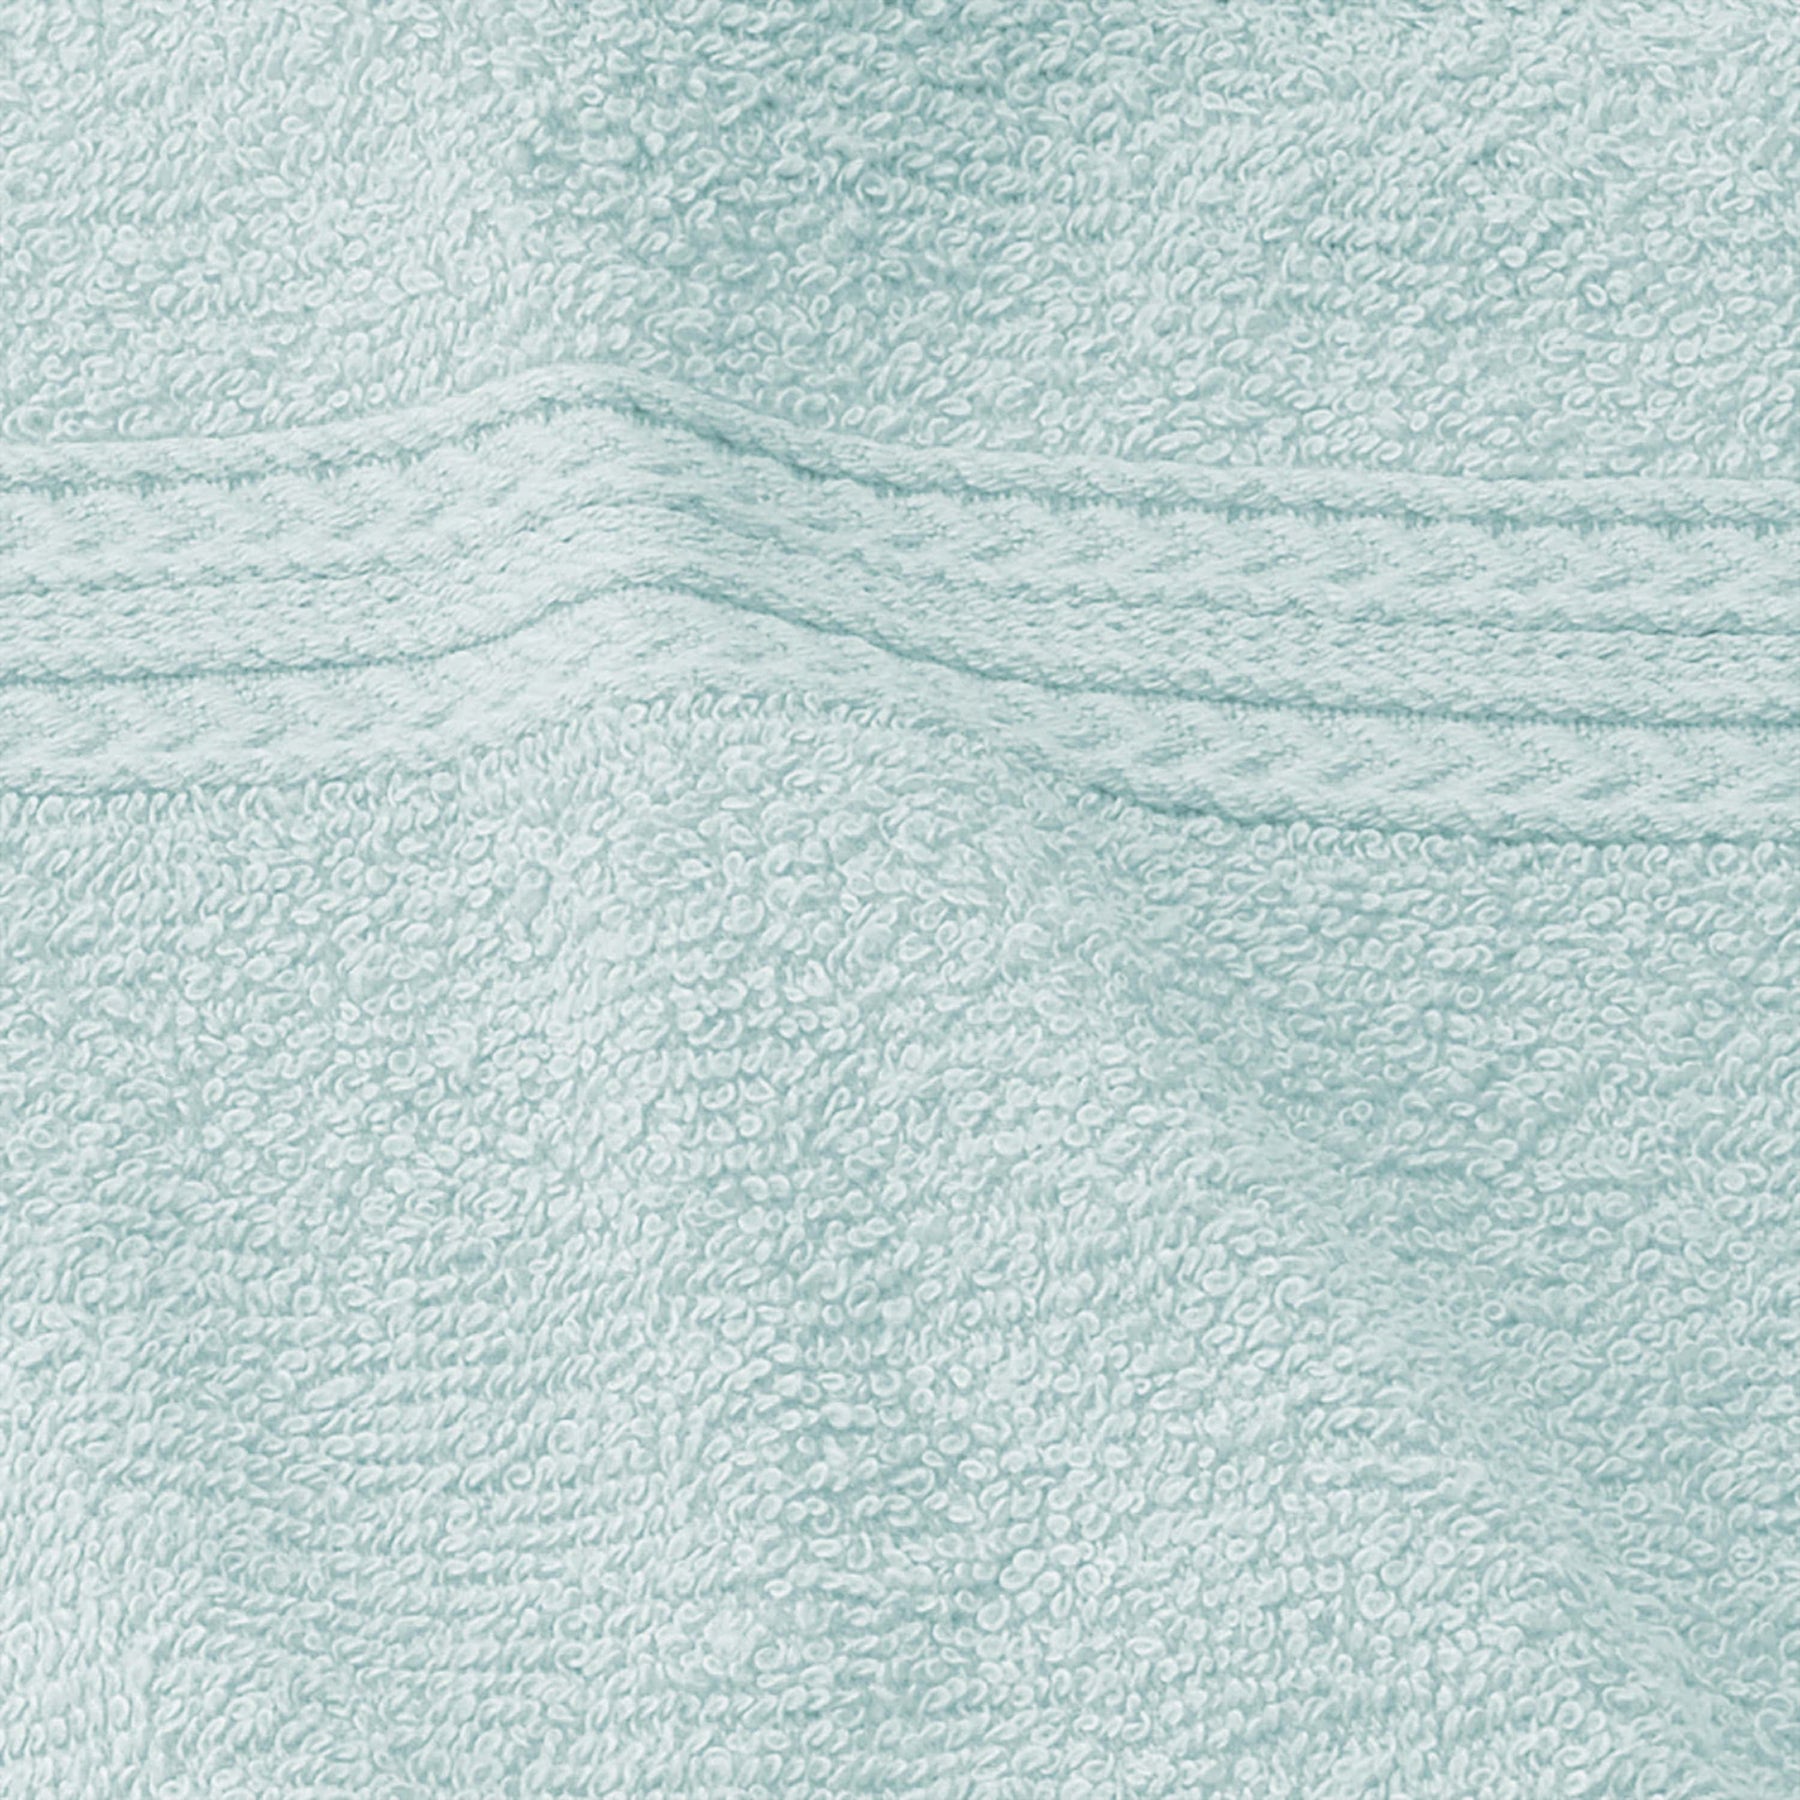 Eco-Friendly Ring Spun Cotton Towel Set - Aquamarine